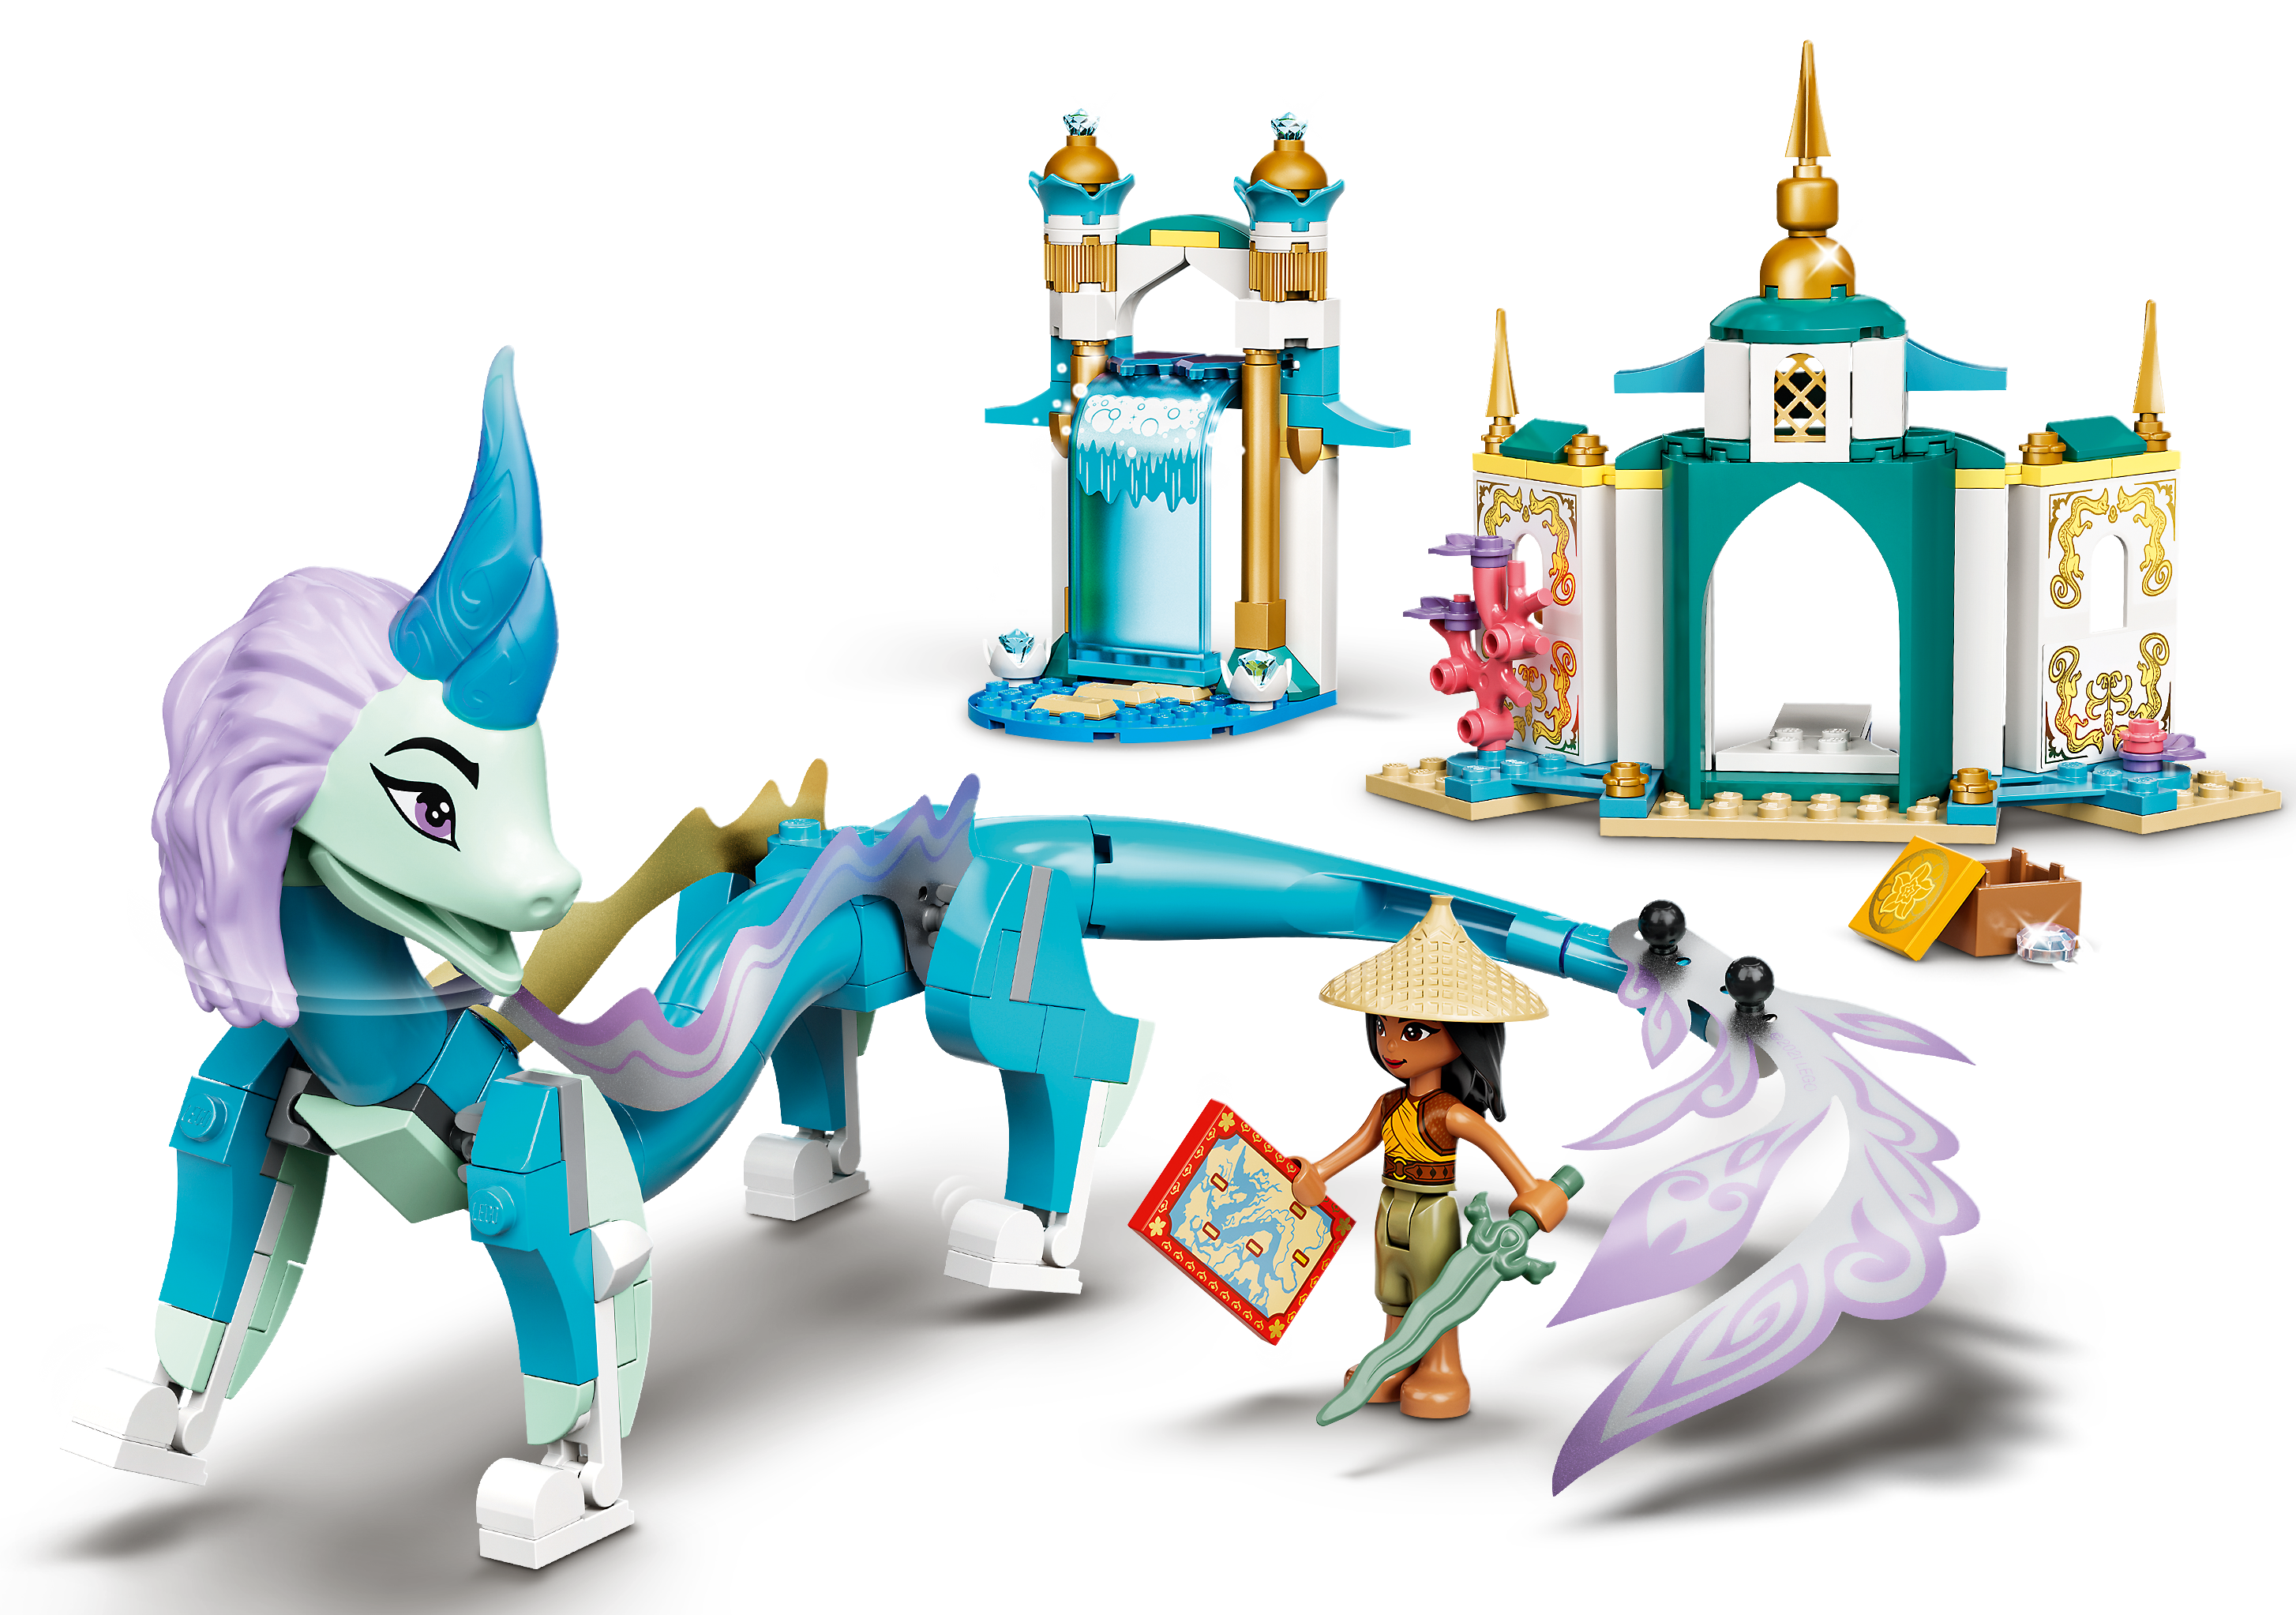 Lego raya and the last dragon